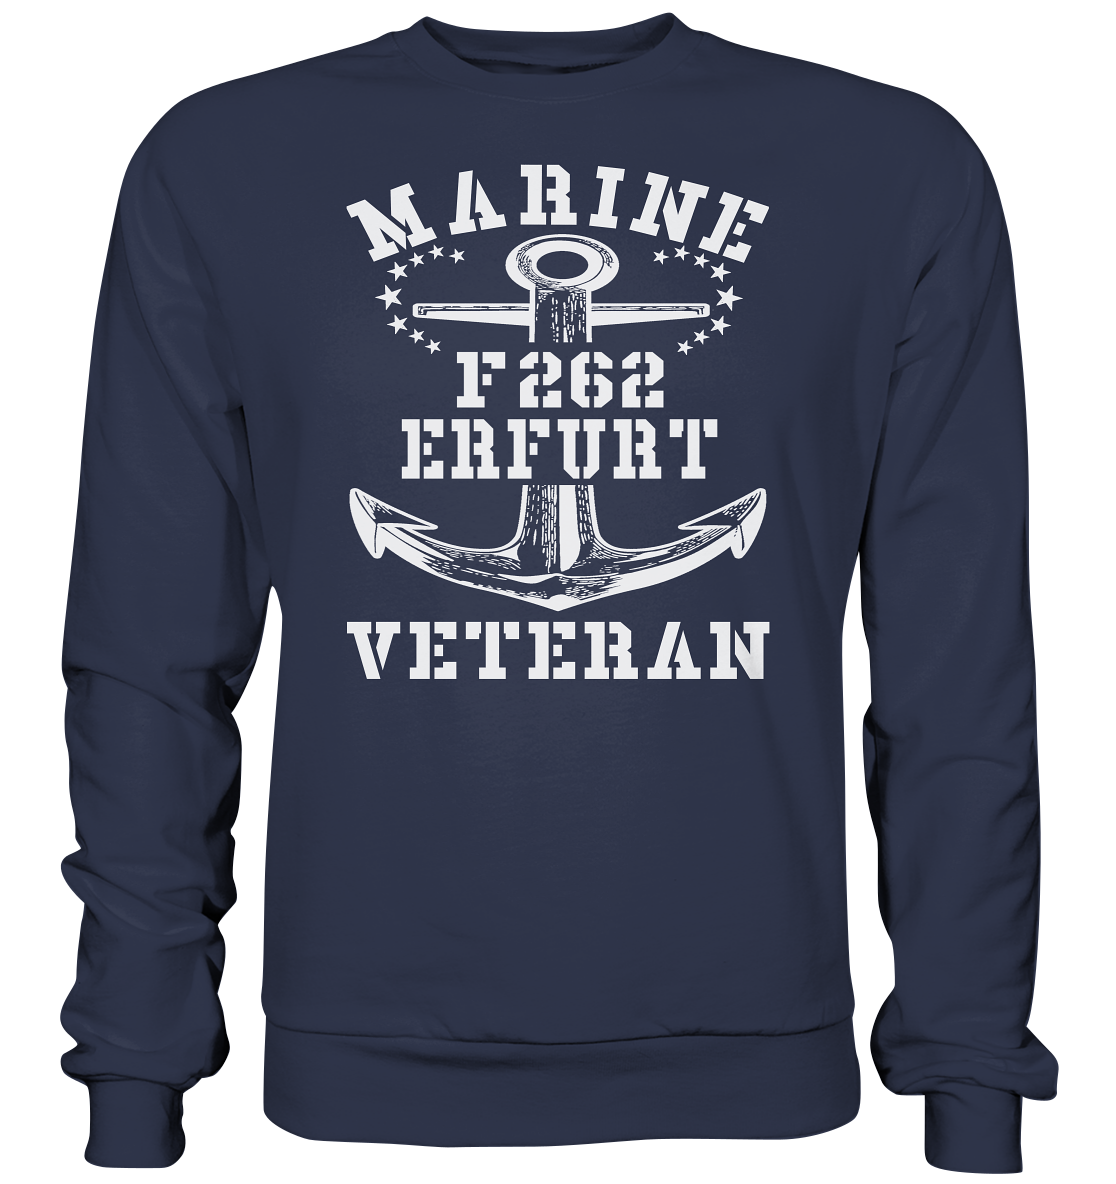 Korvette F262 ERFURT Marine Veteran - Premium Sweatshirt